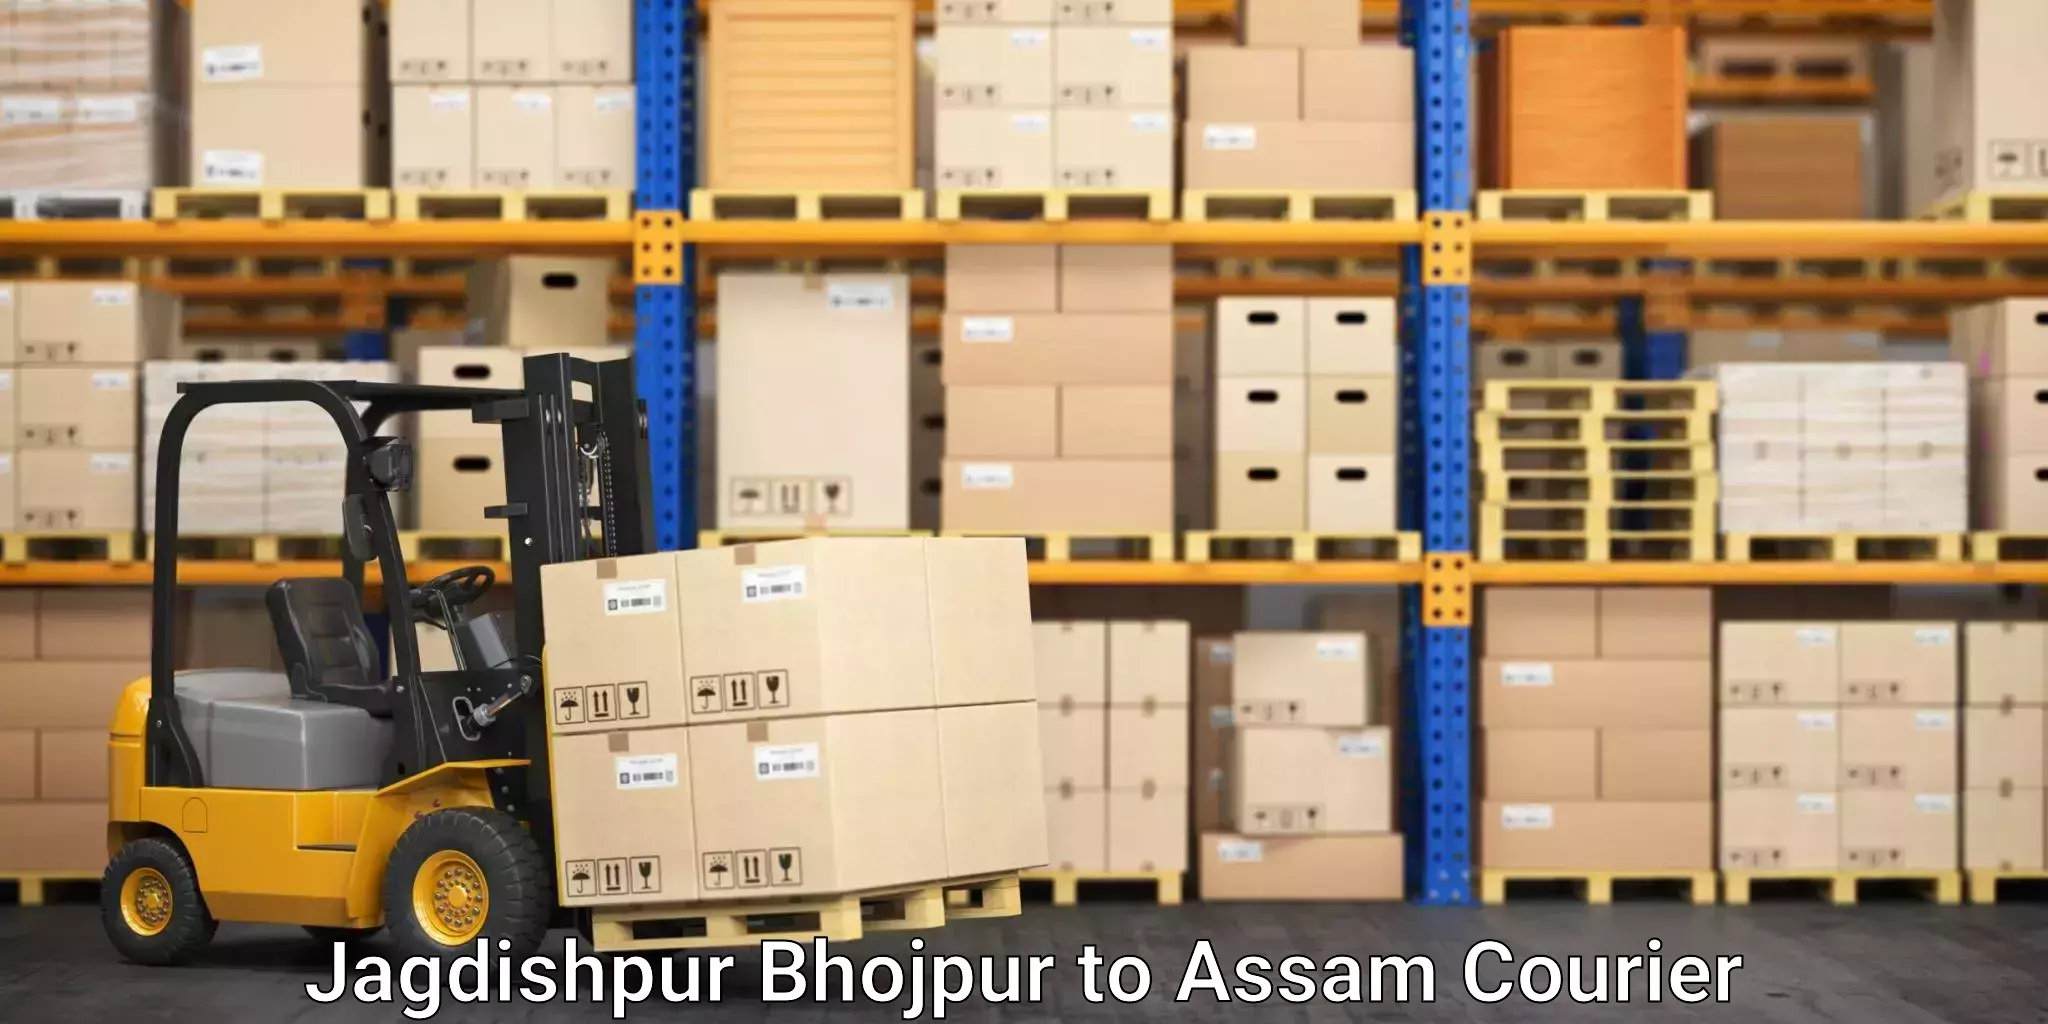 Furniture transport experts Jagdishpur Bhojpur to Balipara